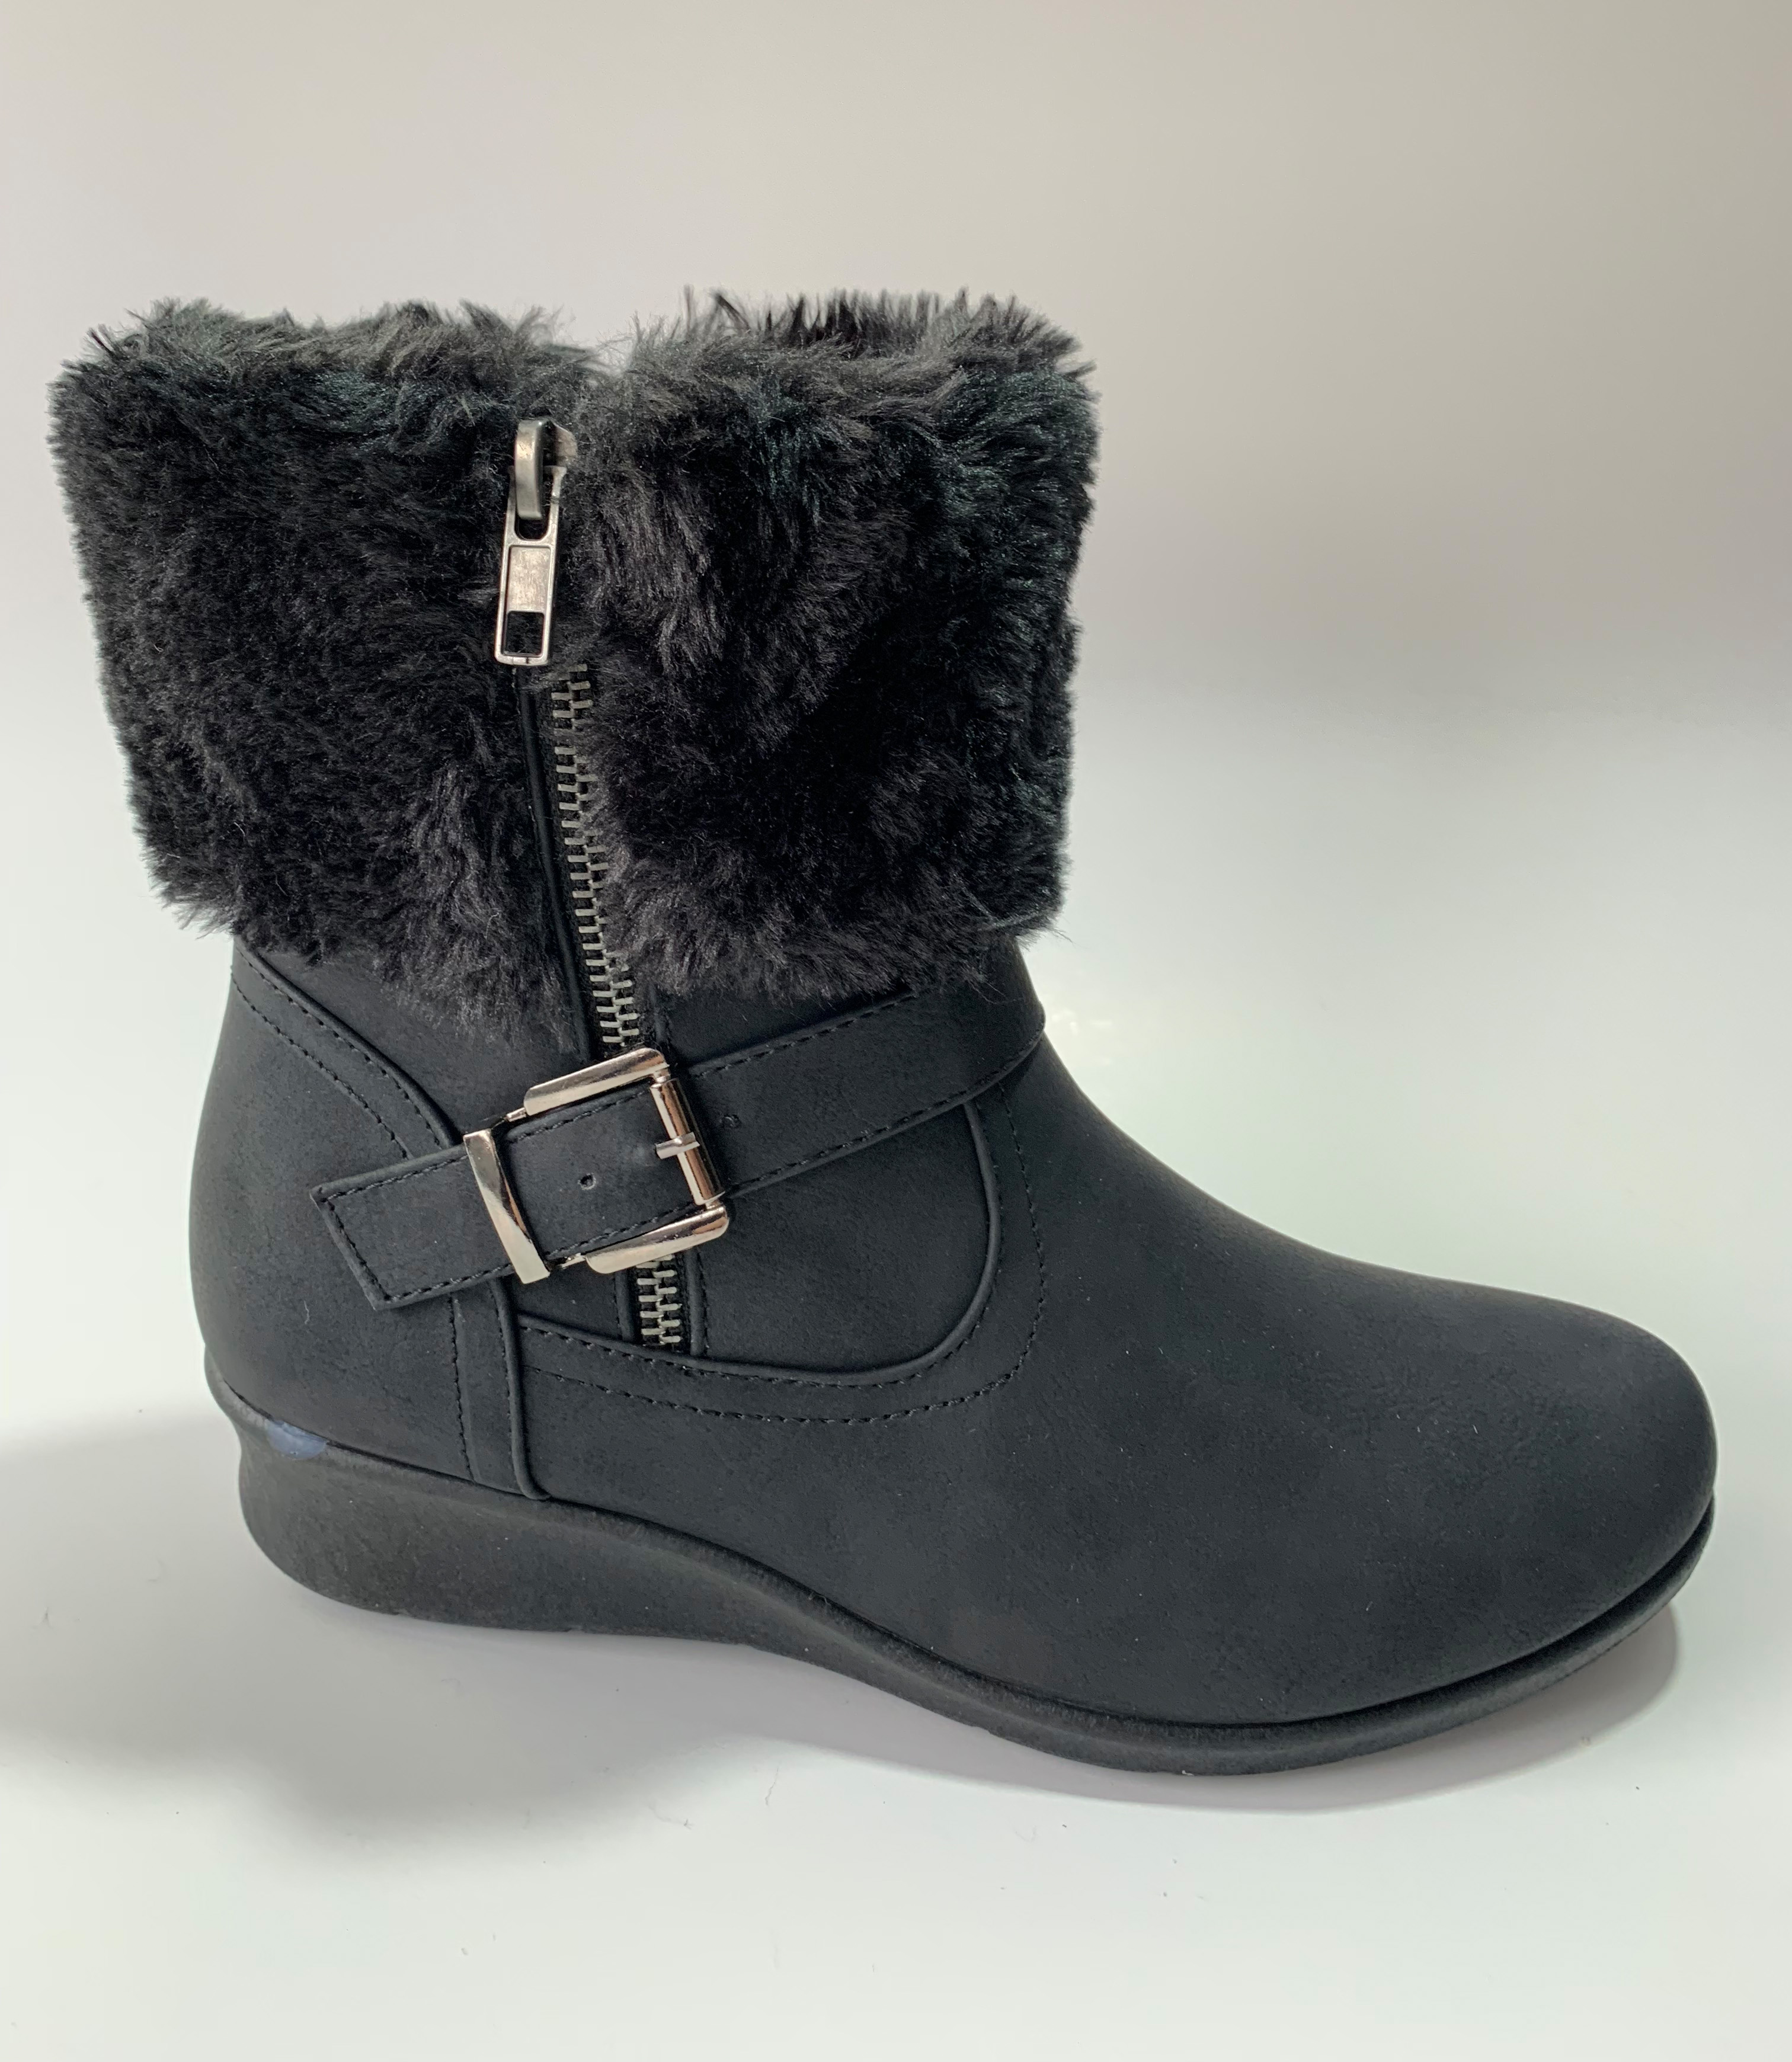 Women's Girls' Warm Fur Snow Boots